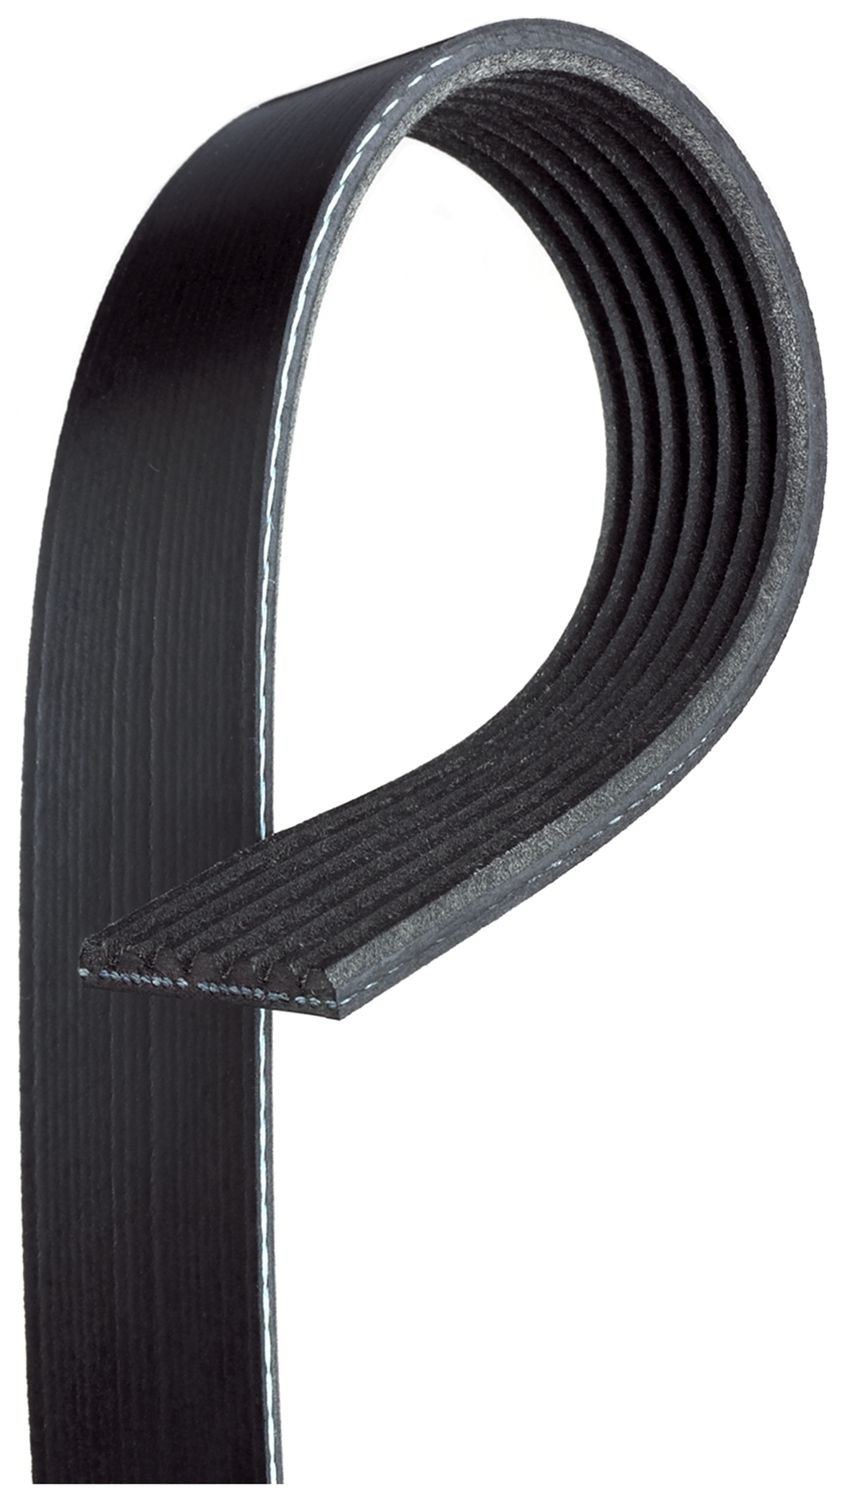 GATES 7PK2875XS Serpentine belt 2875mm, 7, G-Force™ C12™ CVT Belt